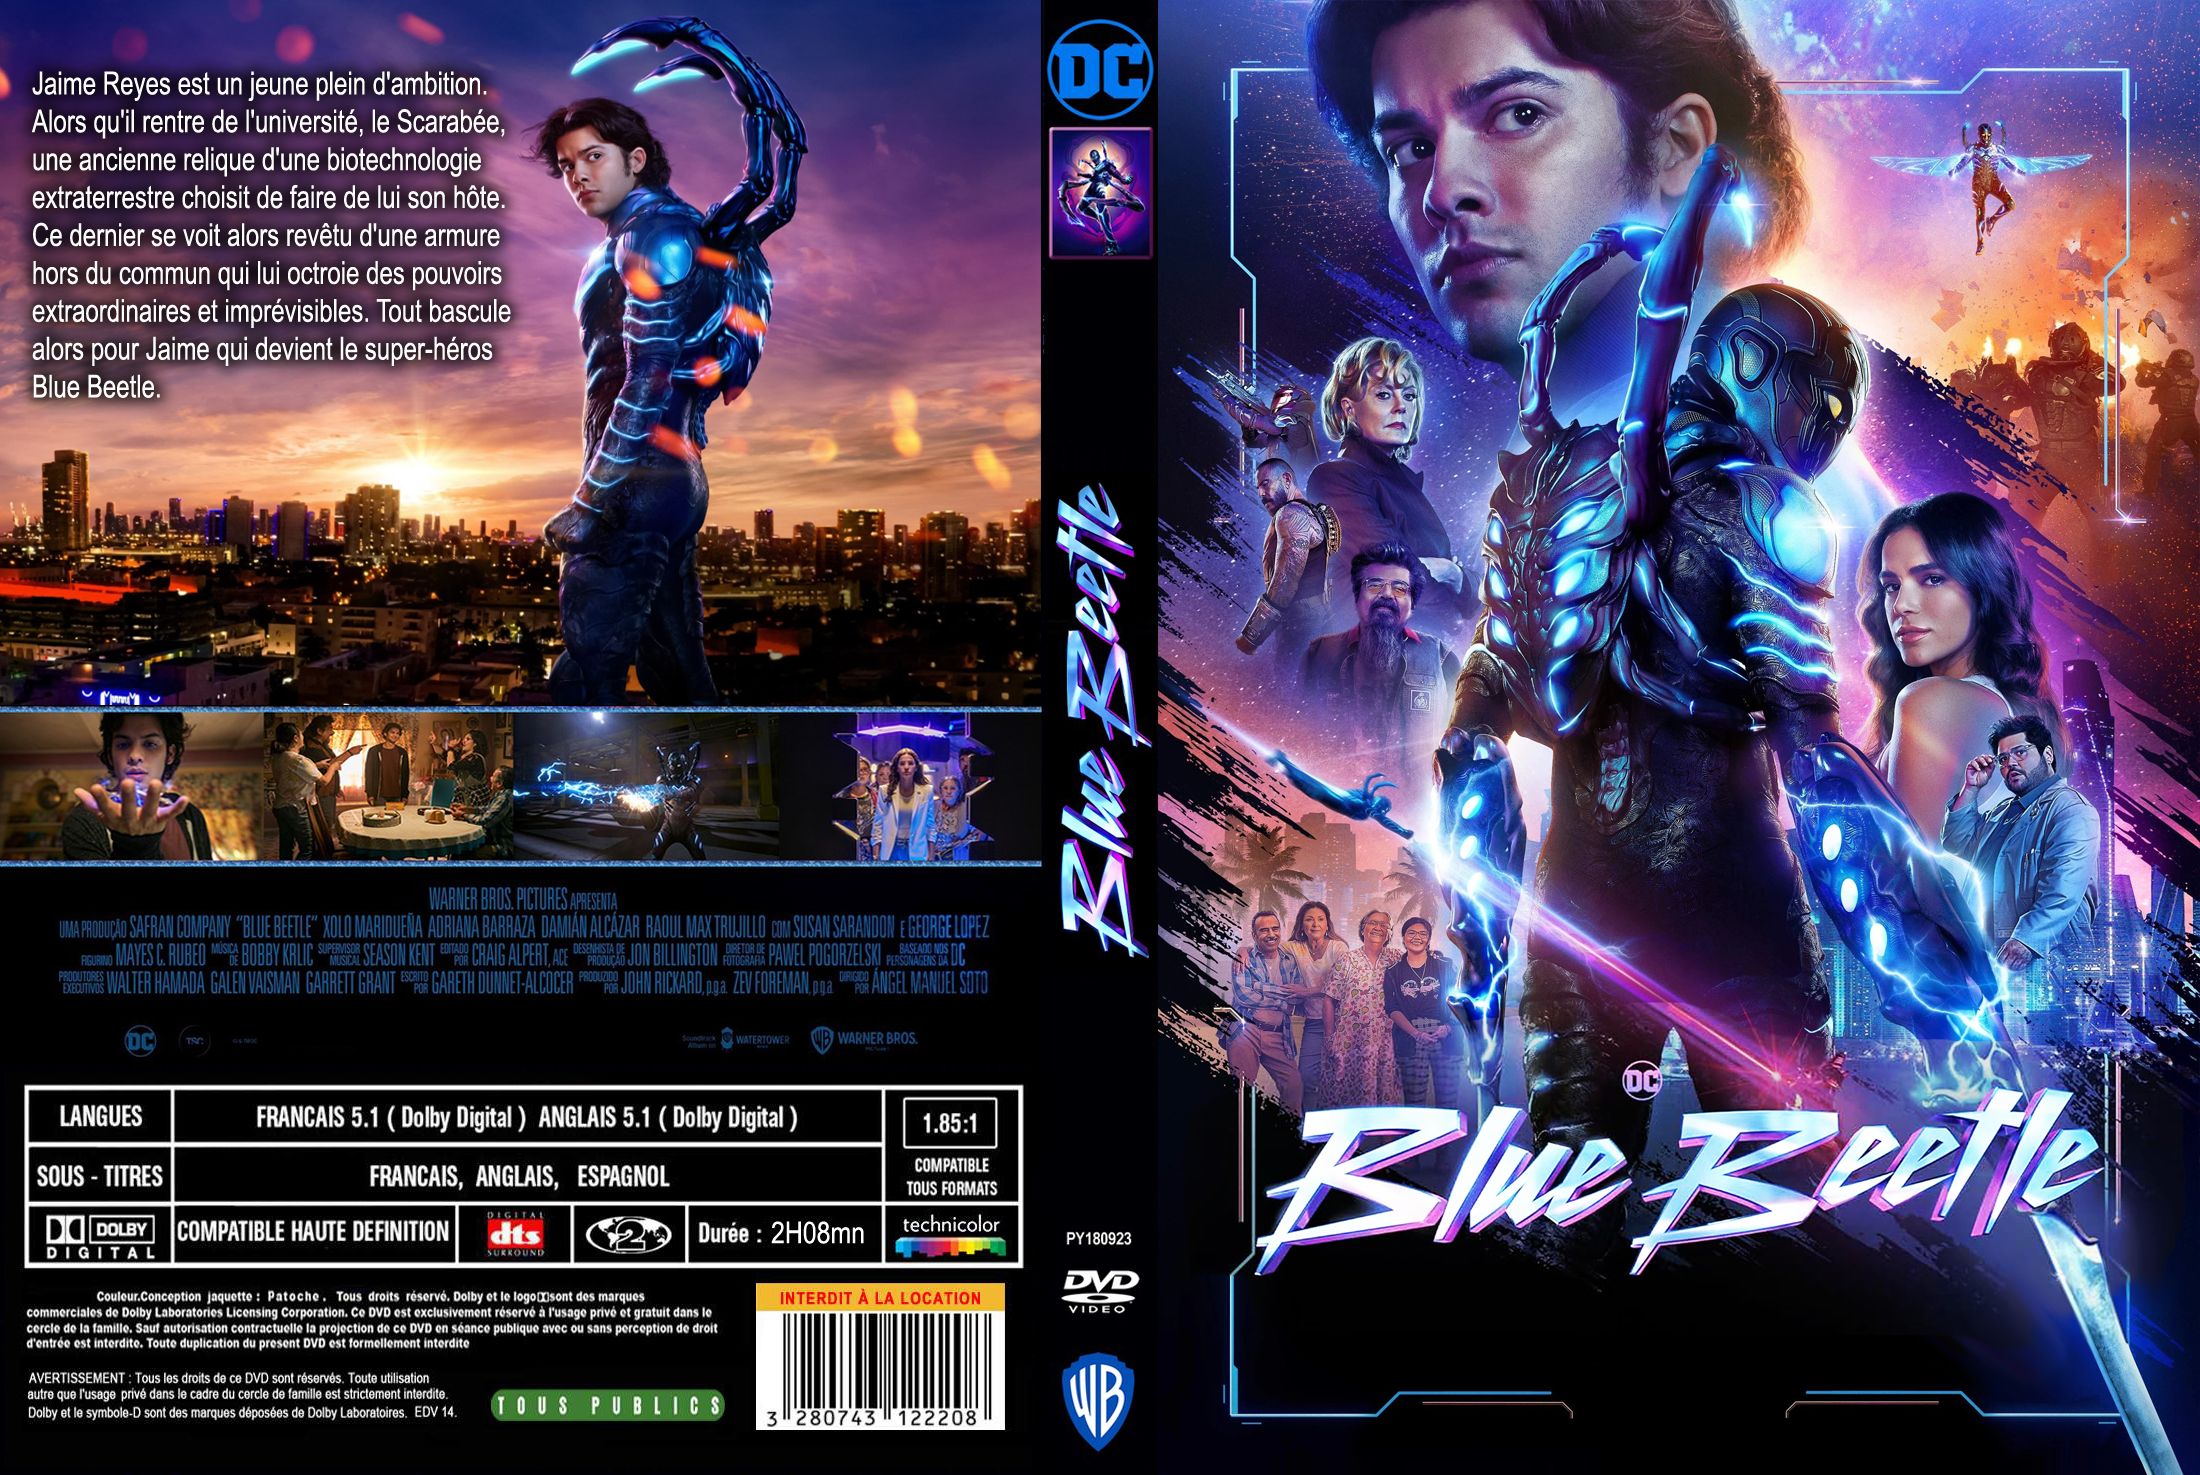 Jaquette DVD Blue Beetle custom